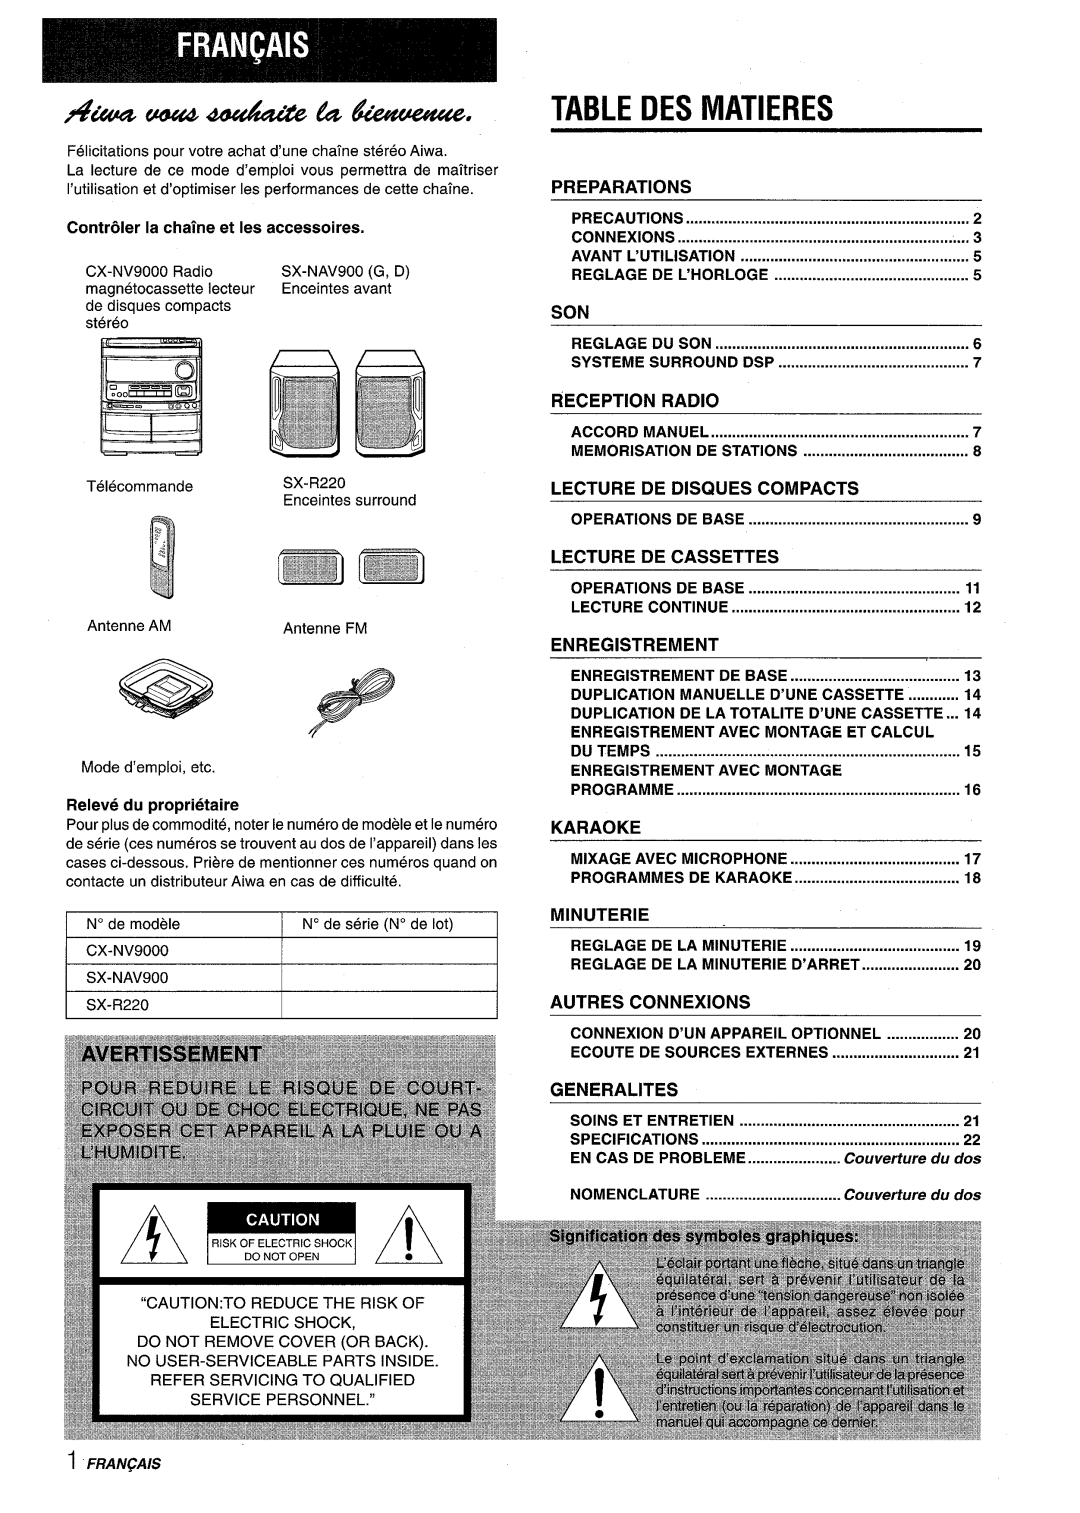 Aiwa NSX-V9000 A%wcw44ud4at%tfkzw, Table Des Matieres, Reception, Radio, Lecture, De Disques Compacts, Enregistrement 